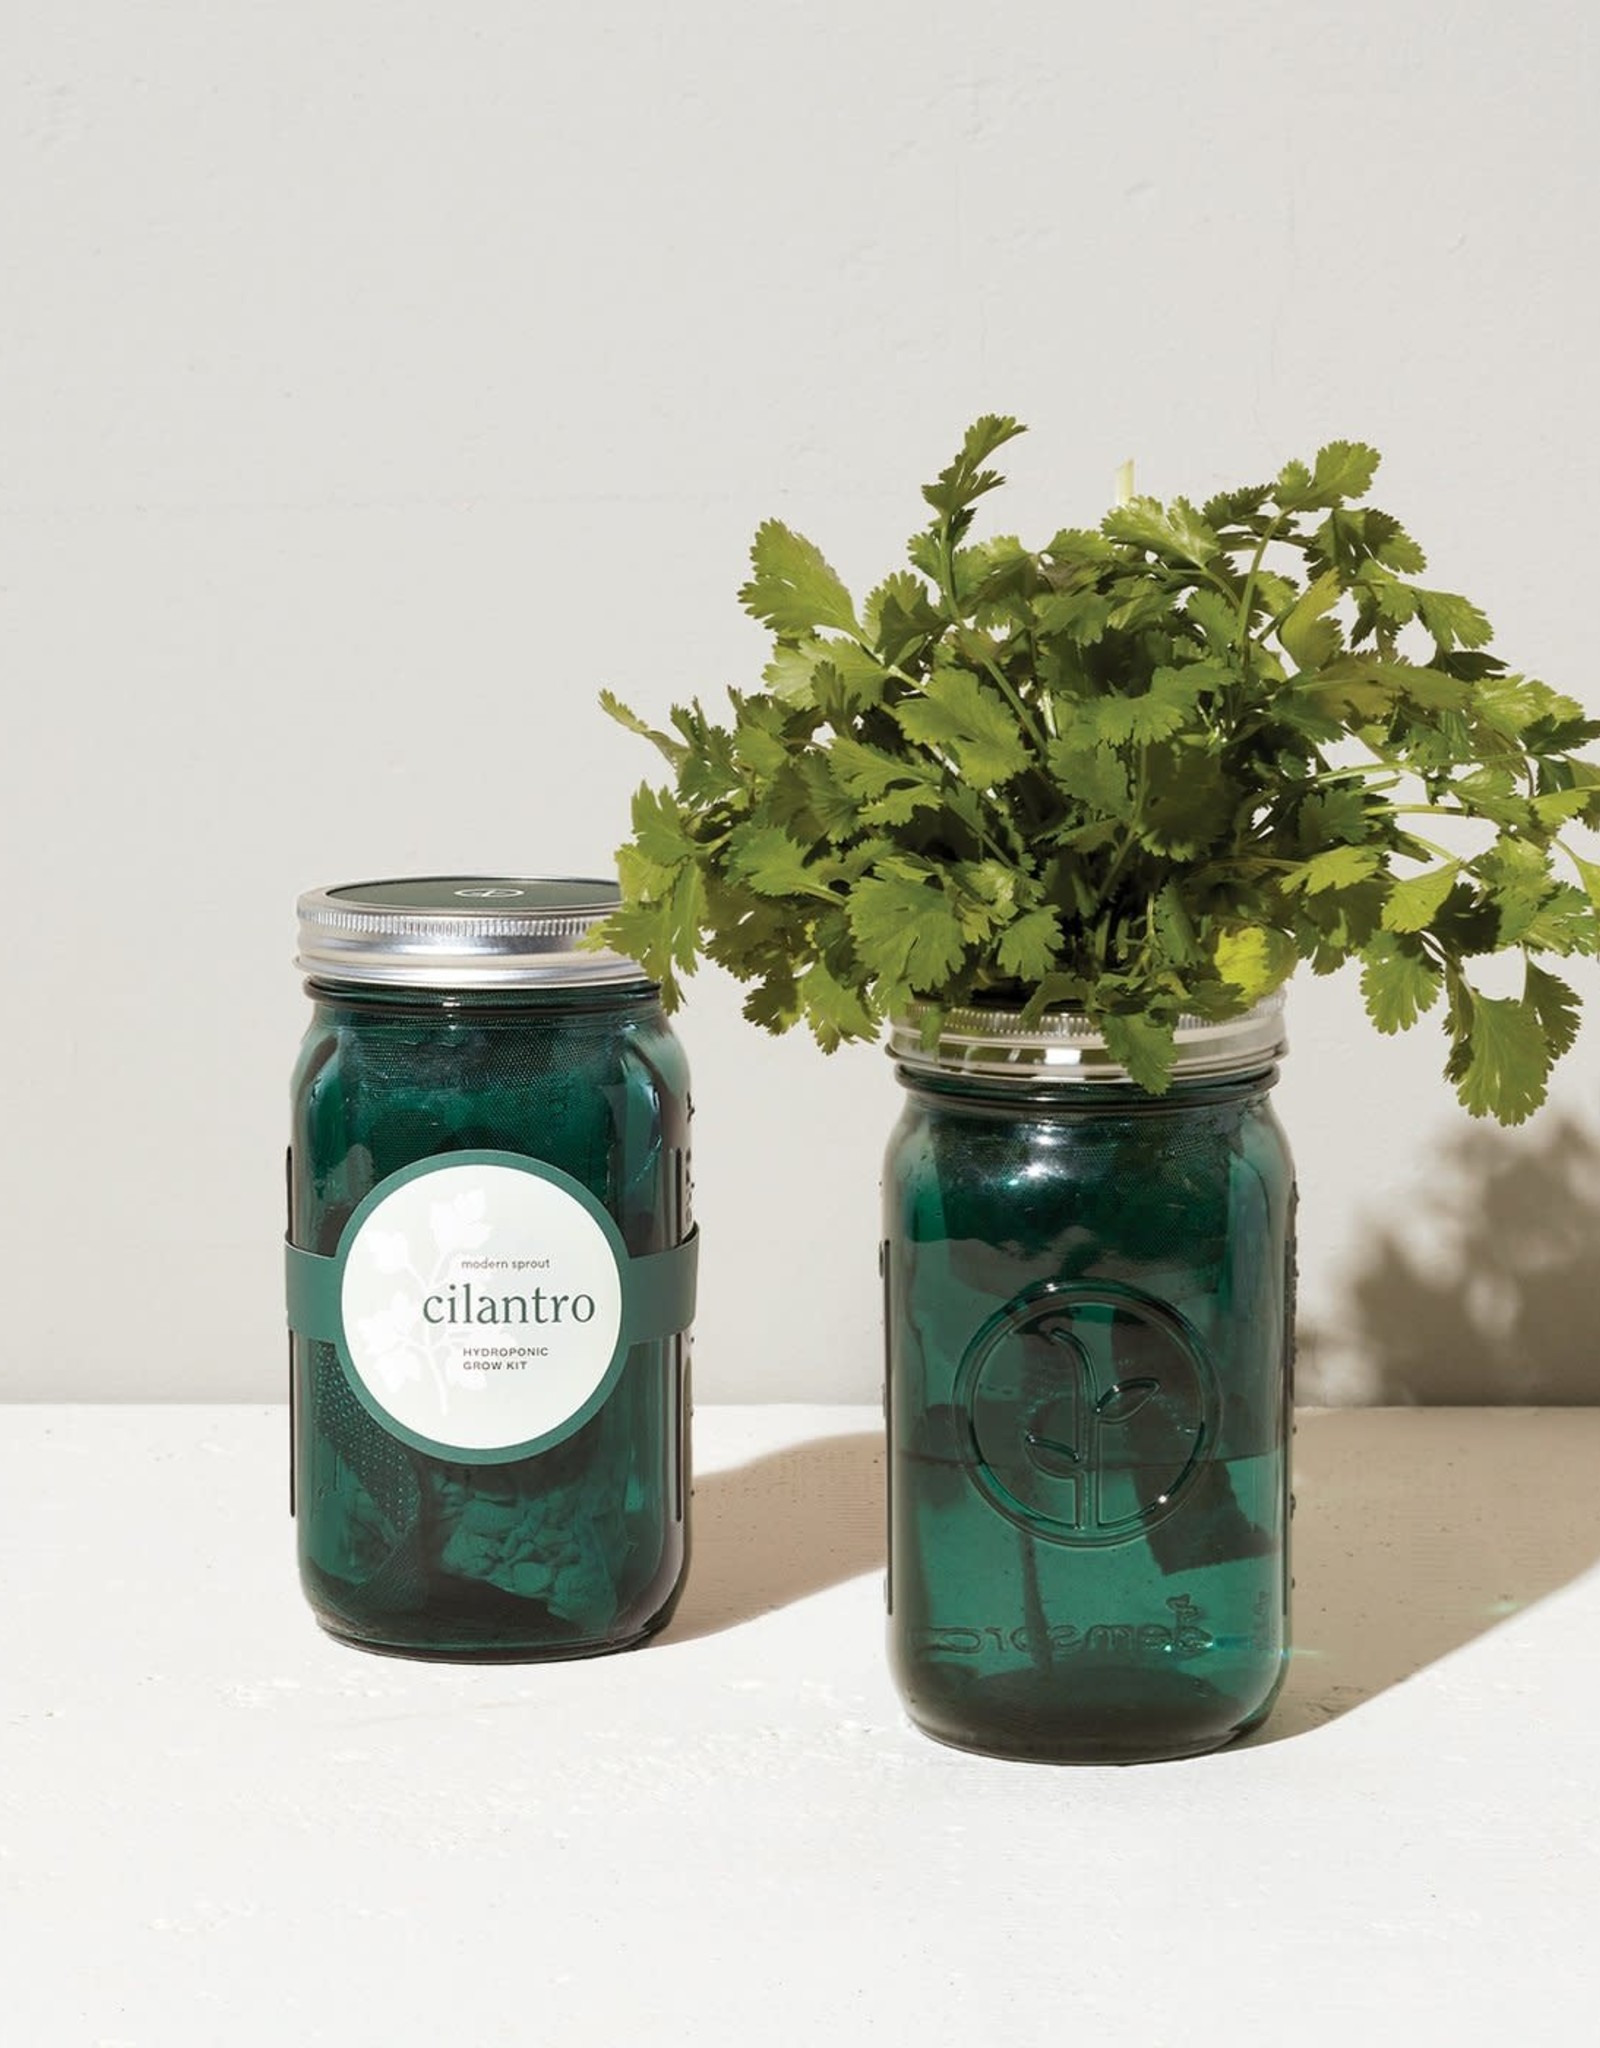 Modern Sprout LLC Self Watering Garden Jar Kit